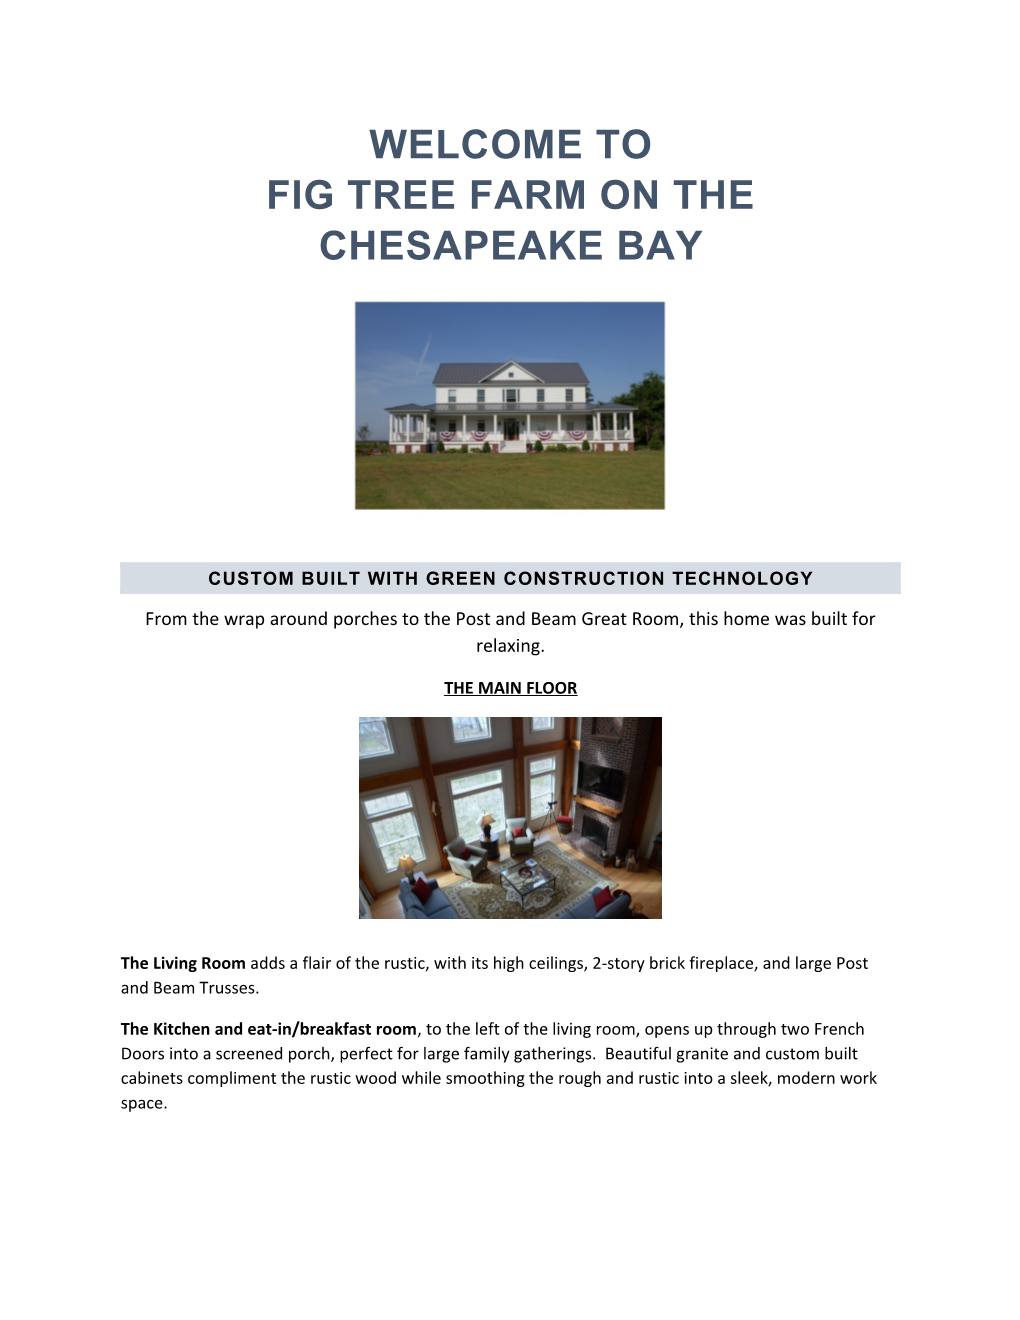 Fig Tree Farm on the Chesapeake Bay